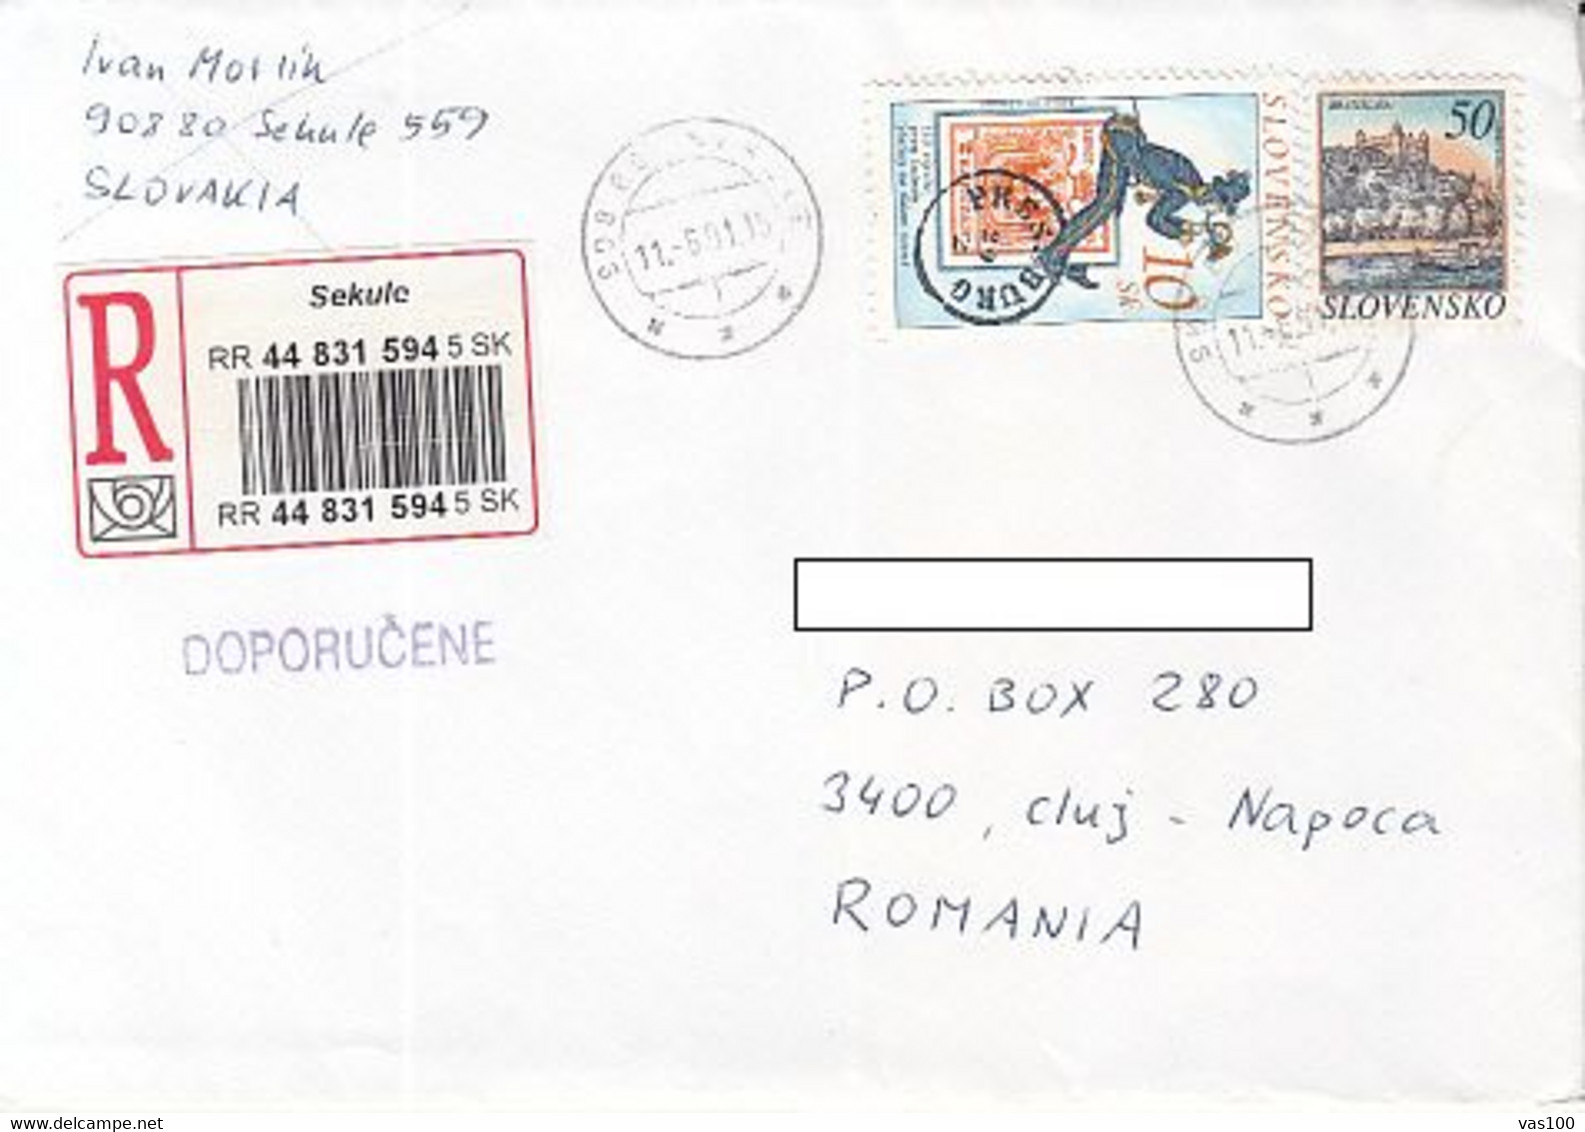 STAMP'S DAY, BRATISLAVA CASTLE, STAMPS ON REGISTERED COVER, 2001, SLOVAKIA - Briefe U. Dokumente